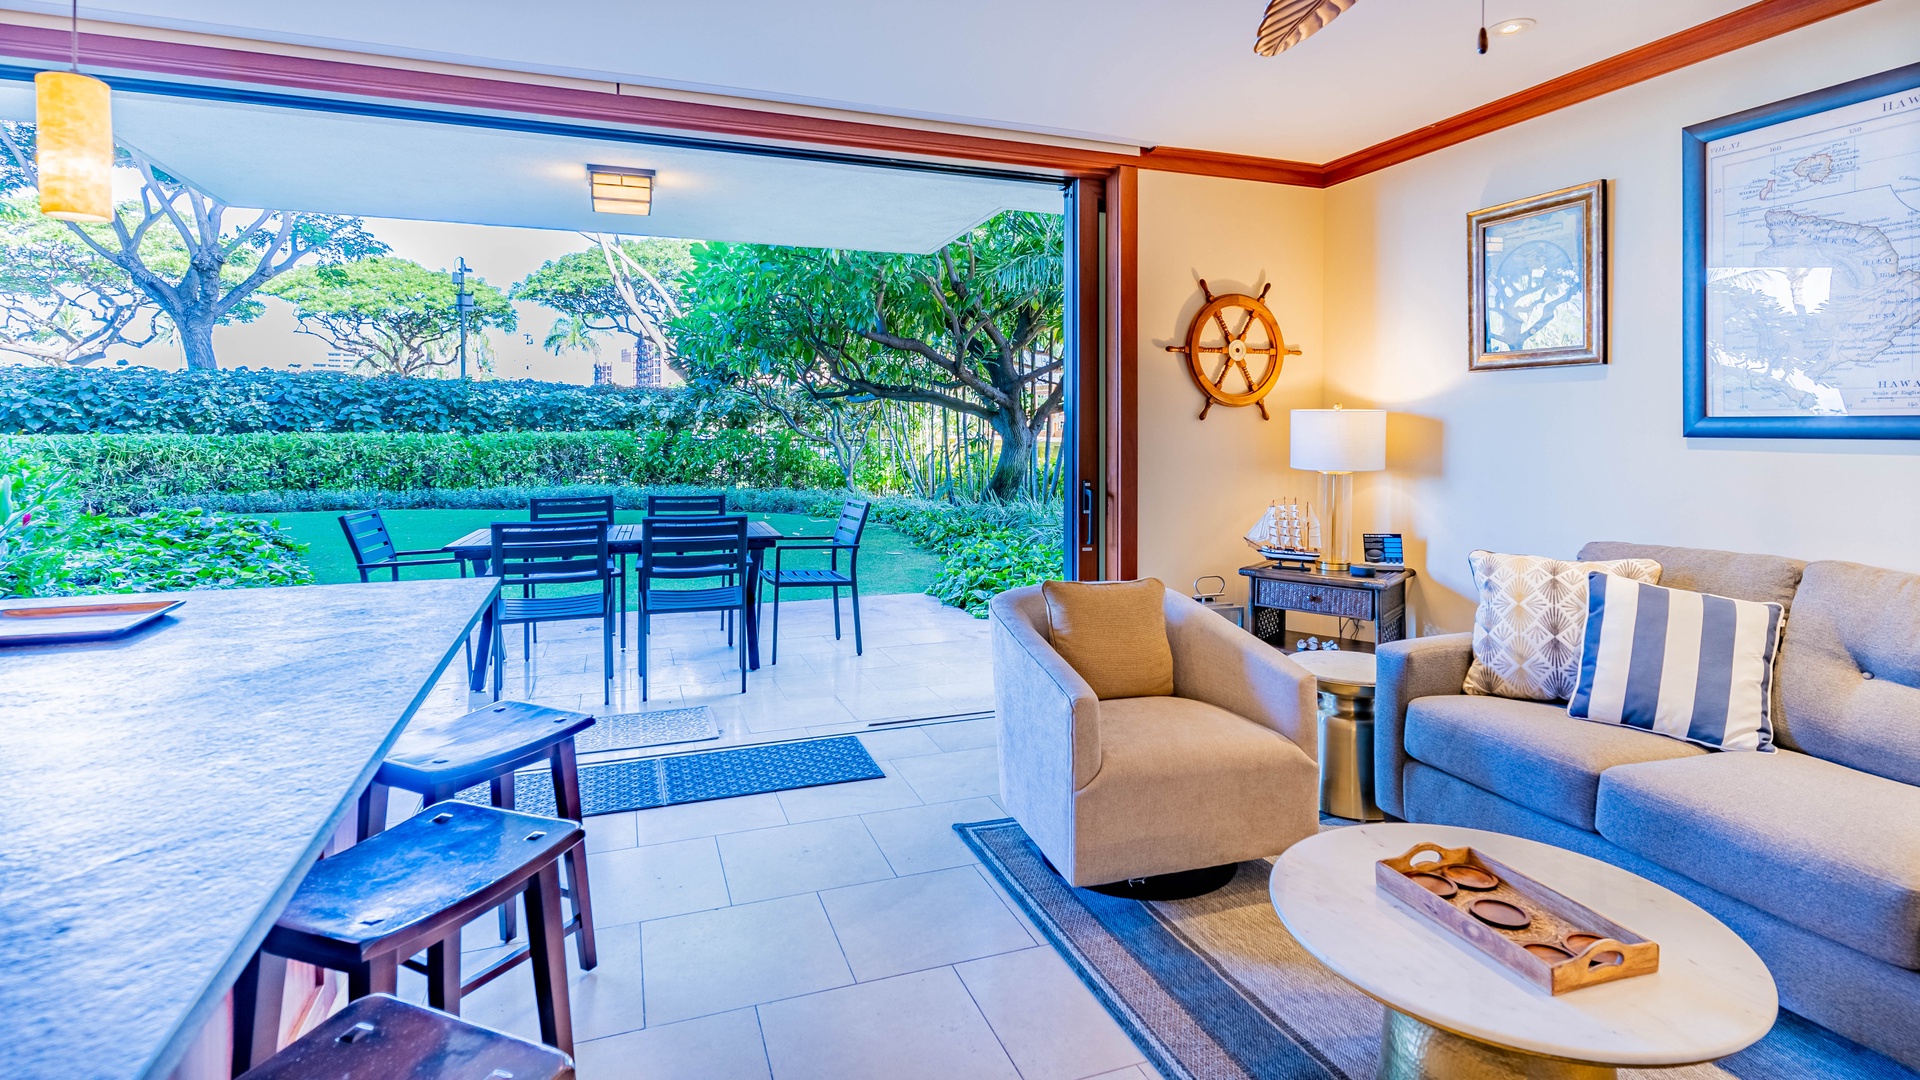 Kapolei Vacation Rentals, Ko Olina Beach Villas B102 - Open the sliding doors for lush green views and sun dappled days.